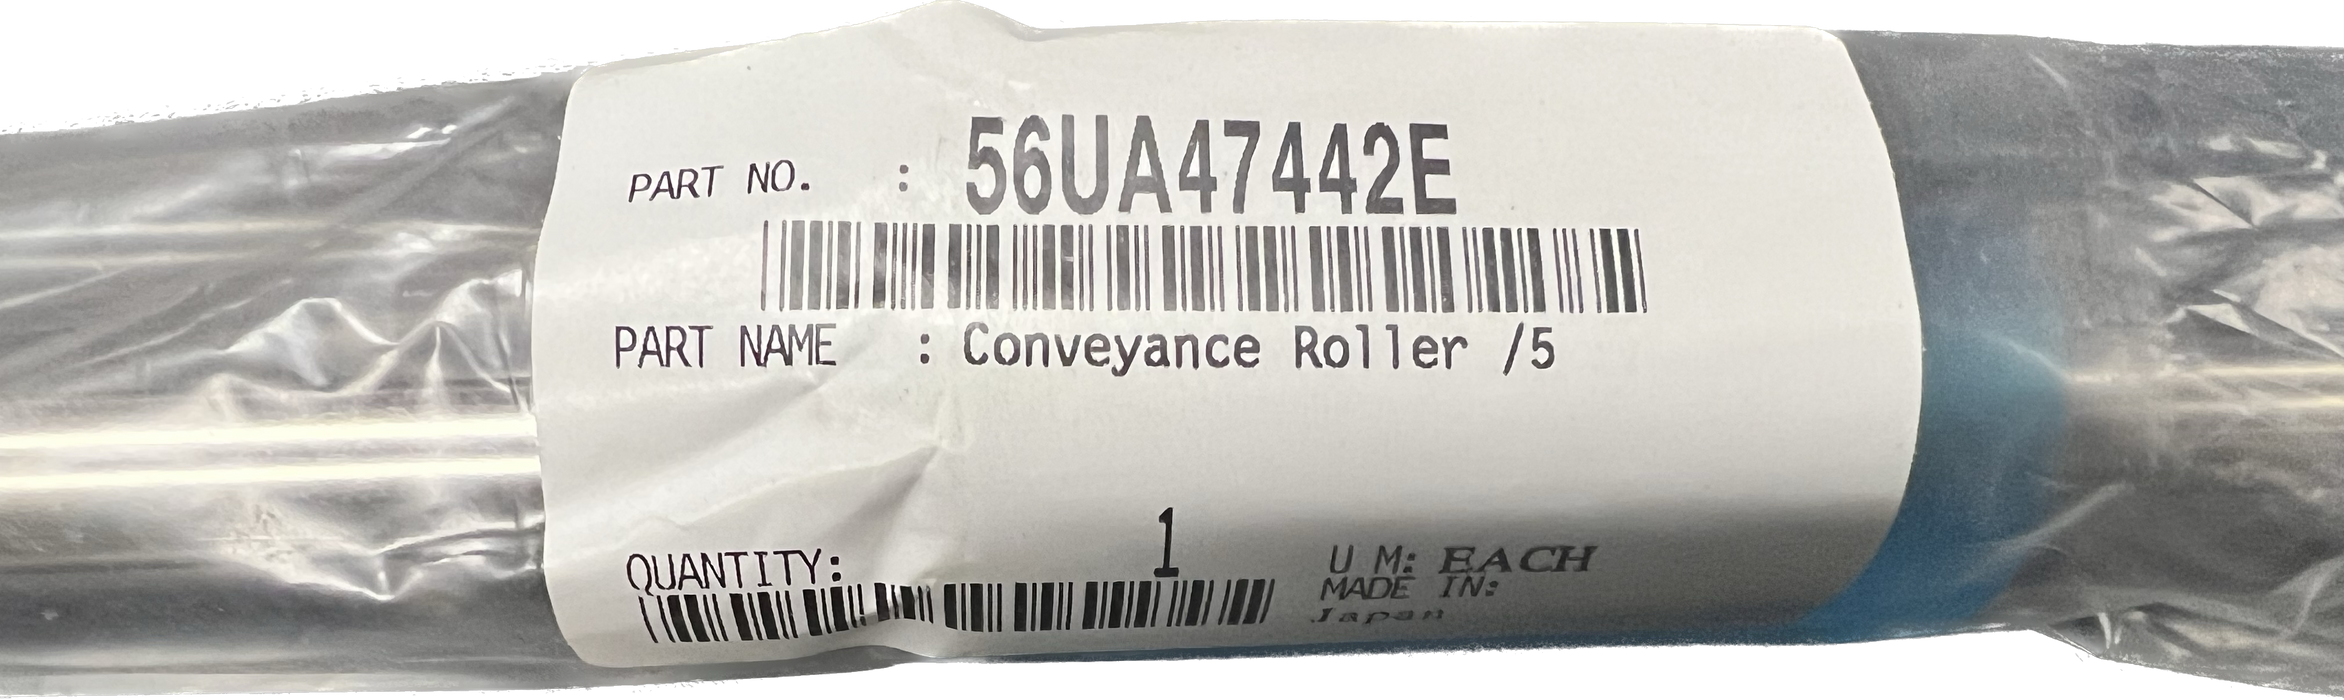 Konica Minolta Conveyance Roller /5 | 56UA47442E